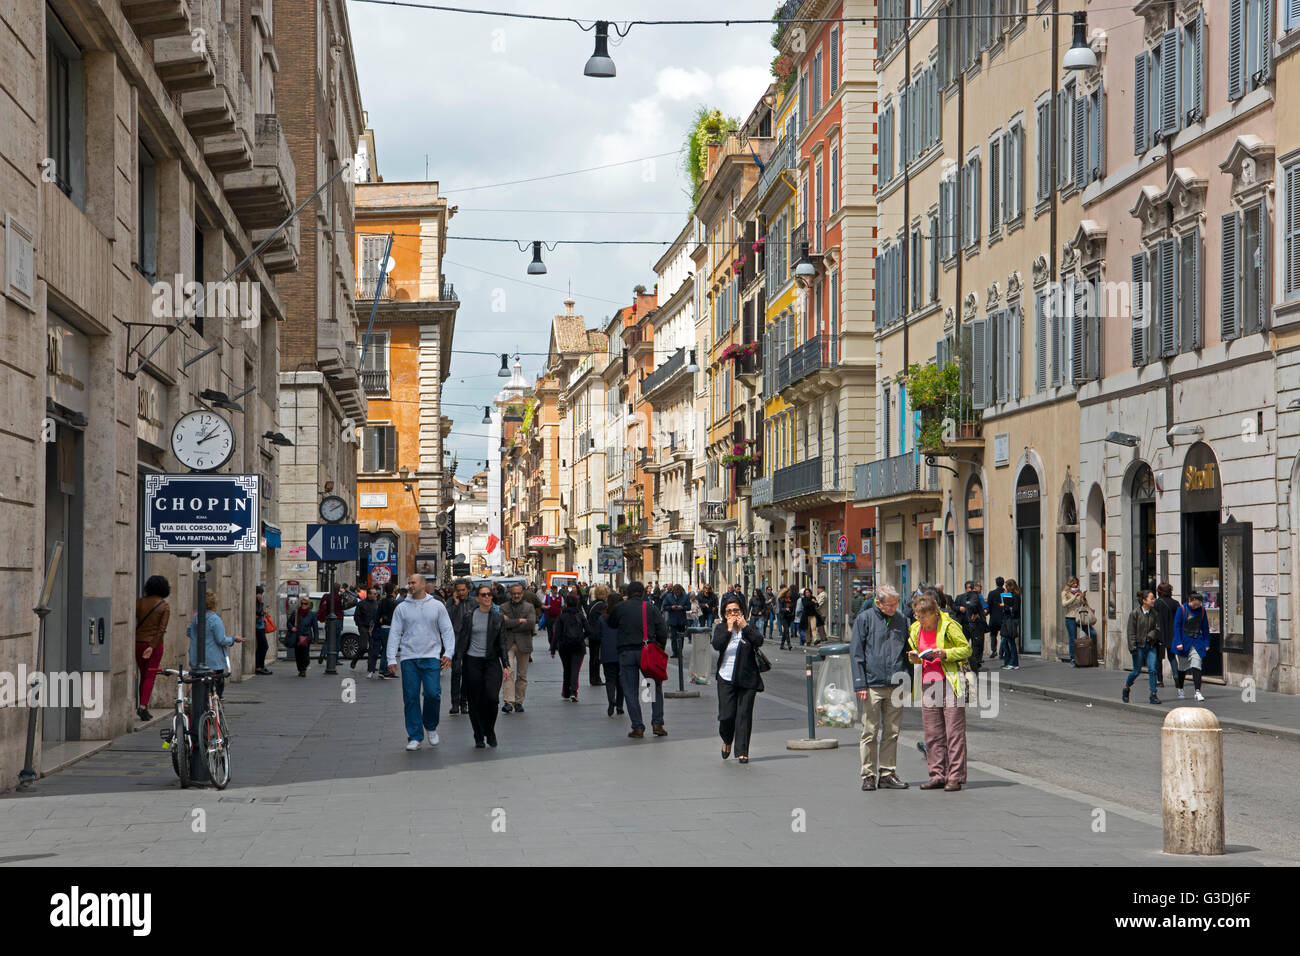 Italien, Rom, Via della Groce, Einkaufsstrasse Foto Stock